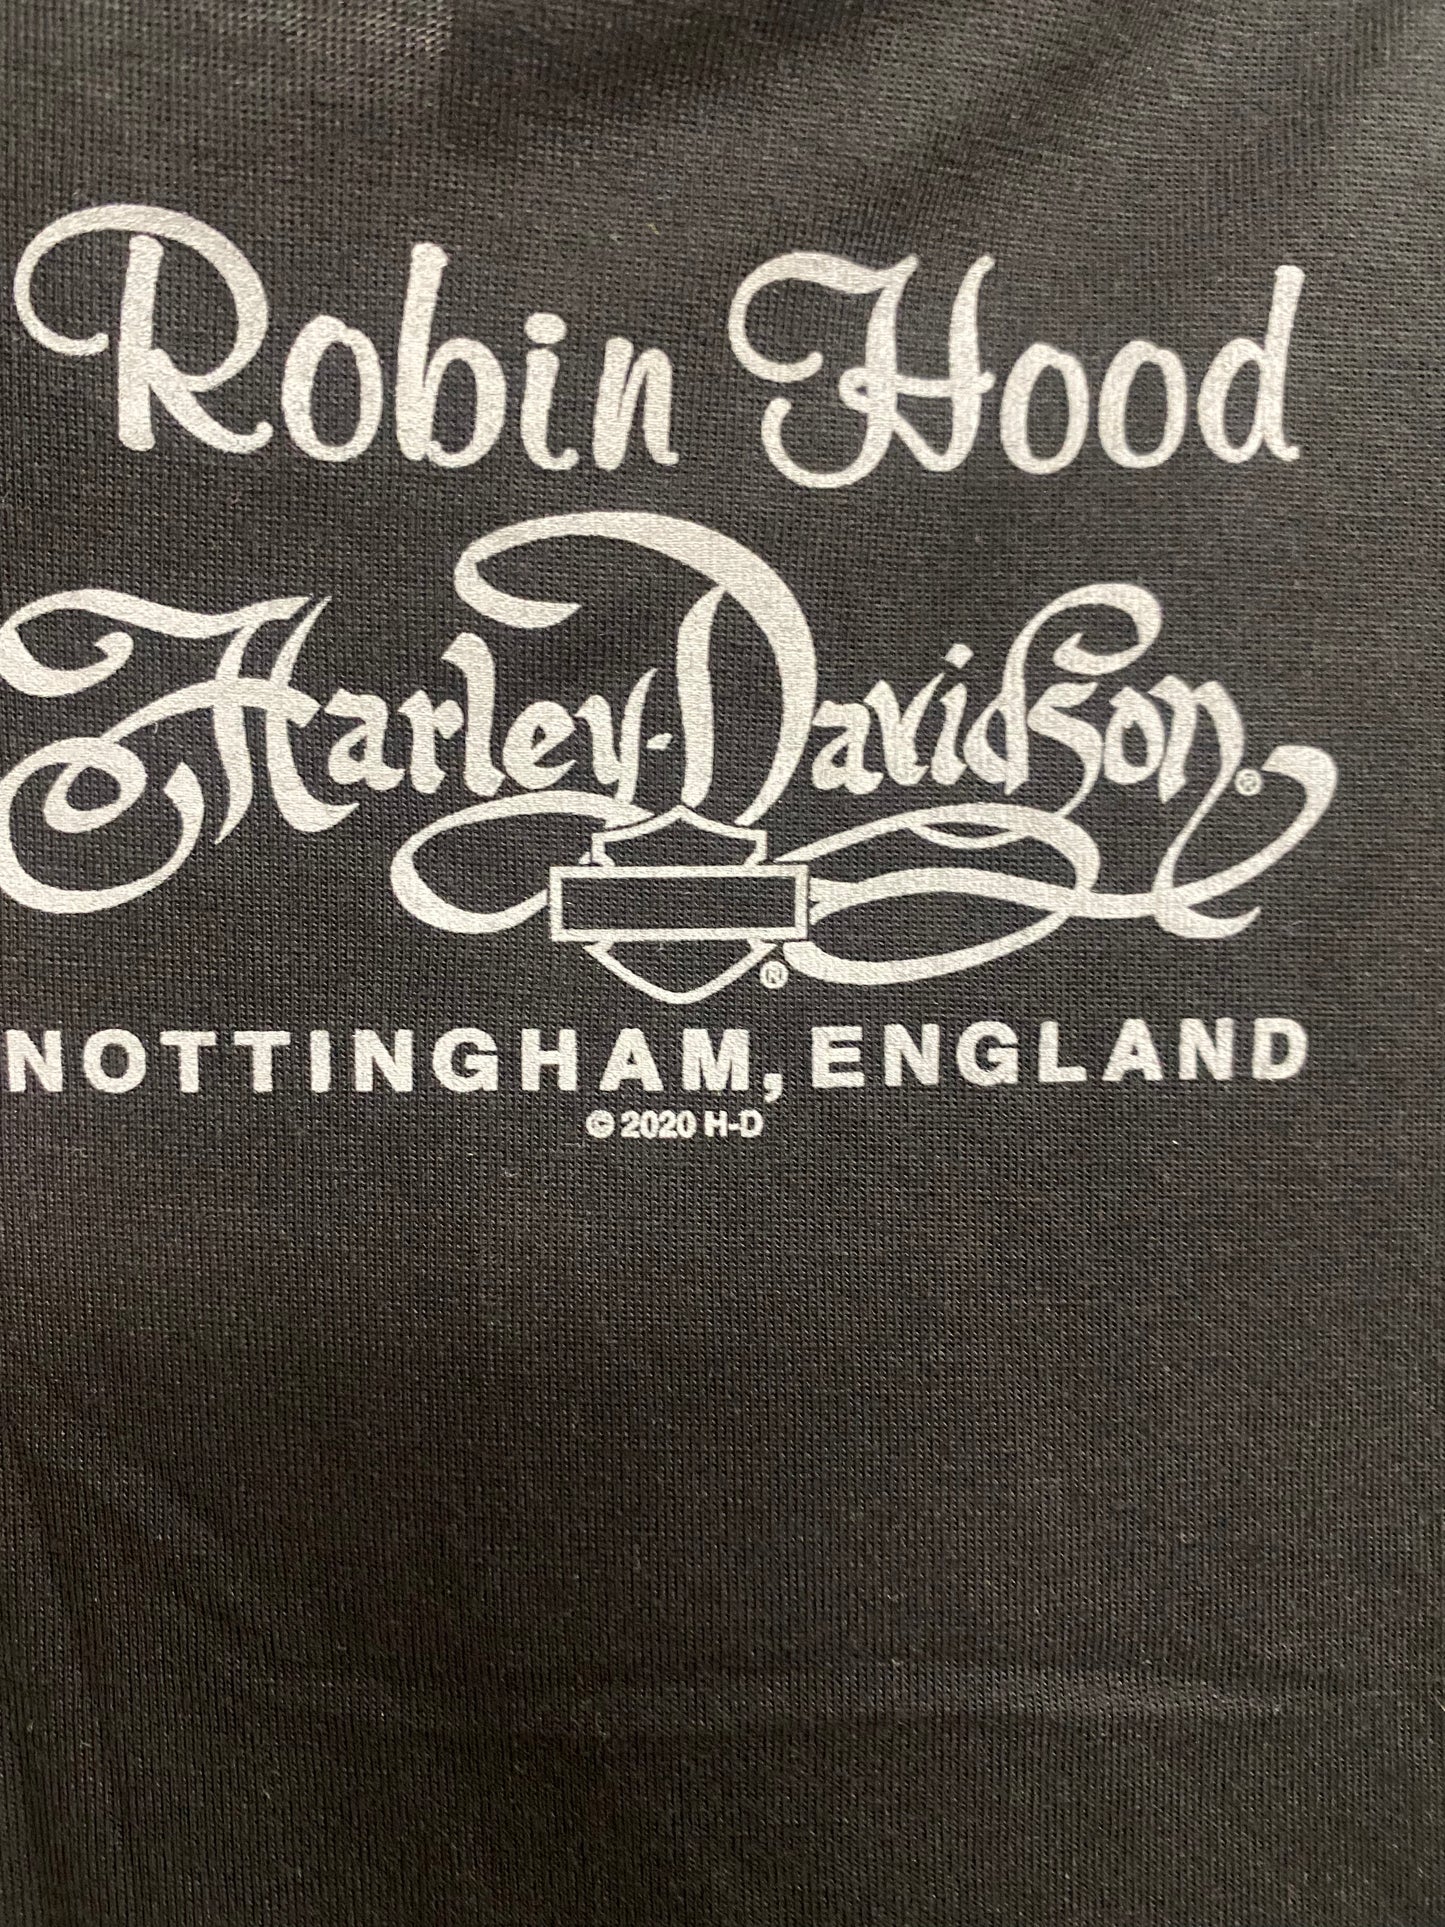 Harley Davidson Women’s Reigning Dealer T-Shirt